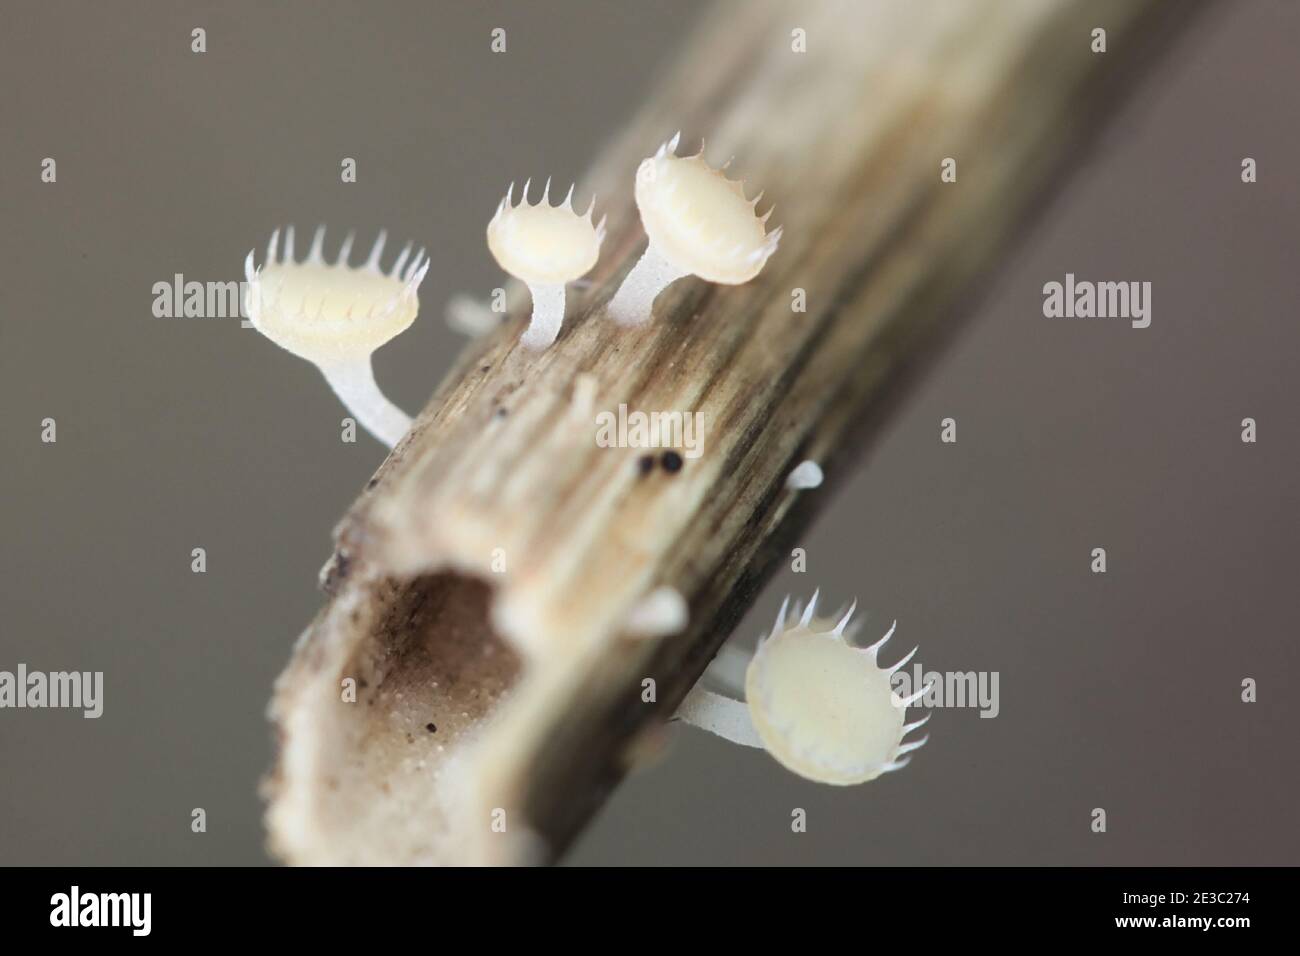 Crocicreas coronatum, also known as Cyathicula coronata, wild fungus from Finland Stock Photo